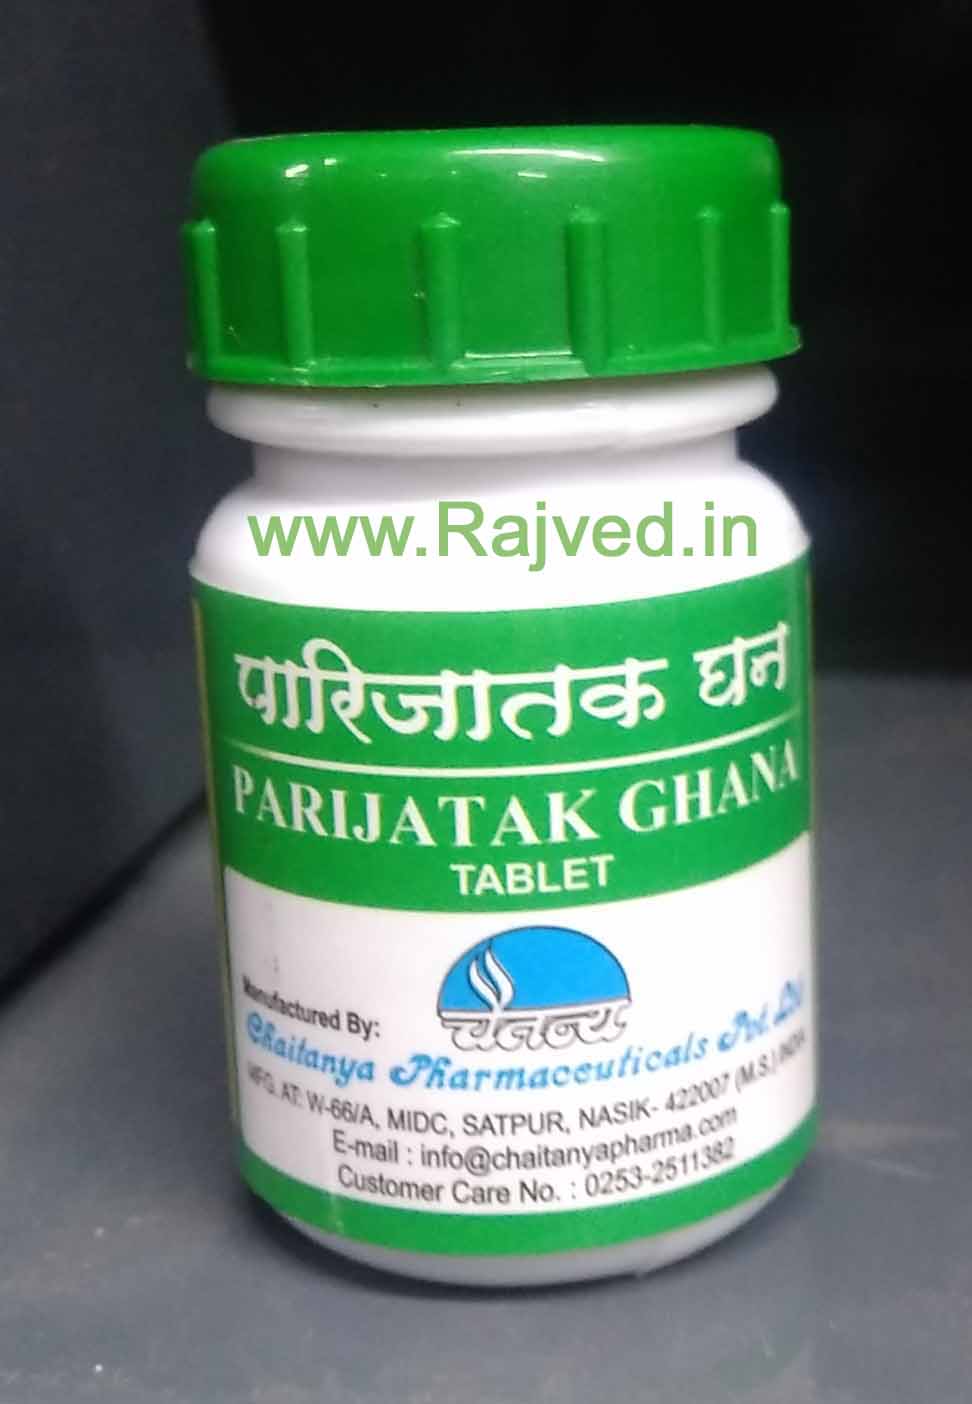 parijatak ghana 2000 tab upto 20% off free shipping chaitanya pharmaceuticals